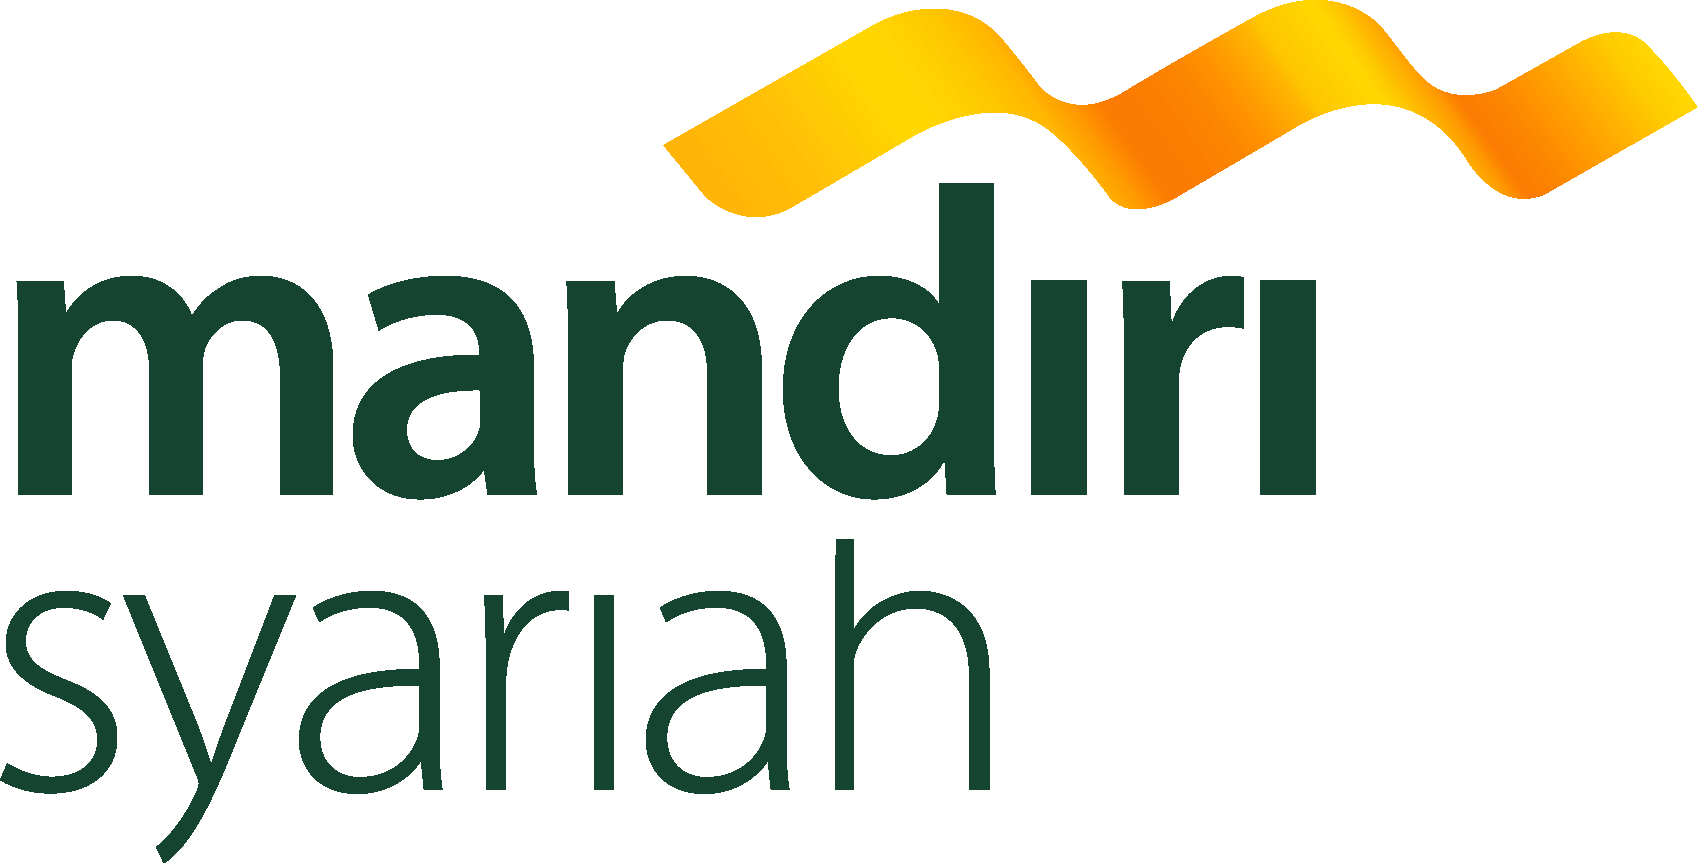 Банки логотипы png. Mandiri Bank. Taspen. Bank Mandiri Indonesia. Bank logo.